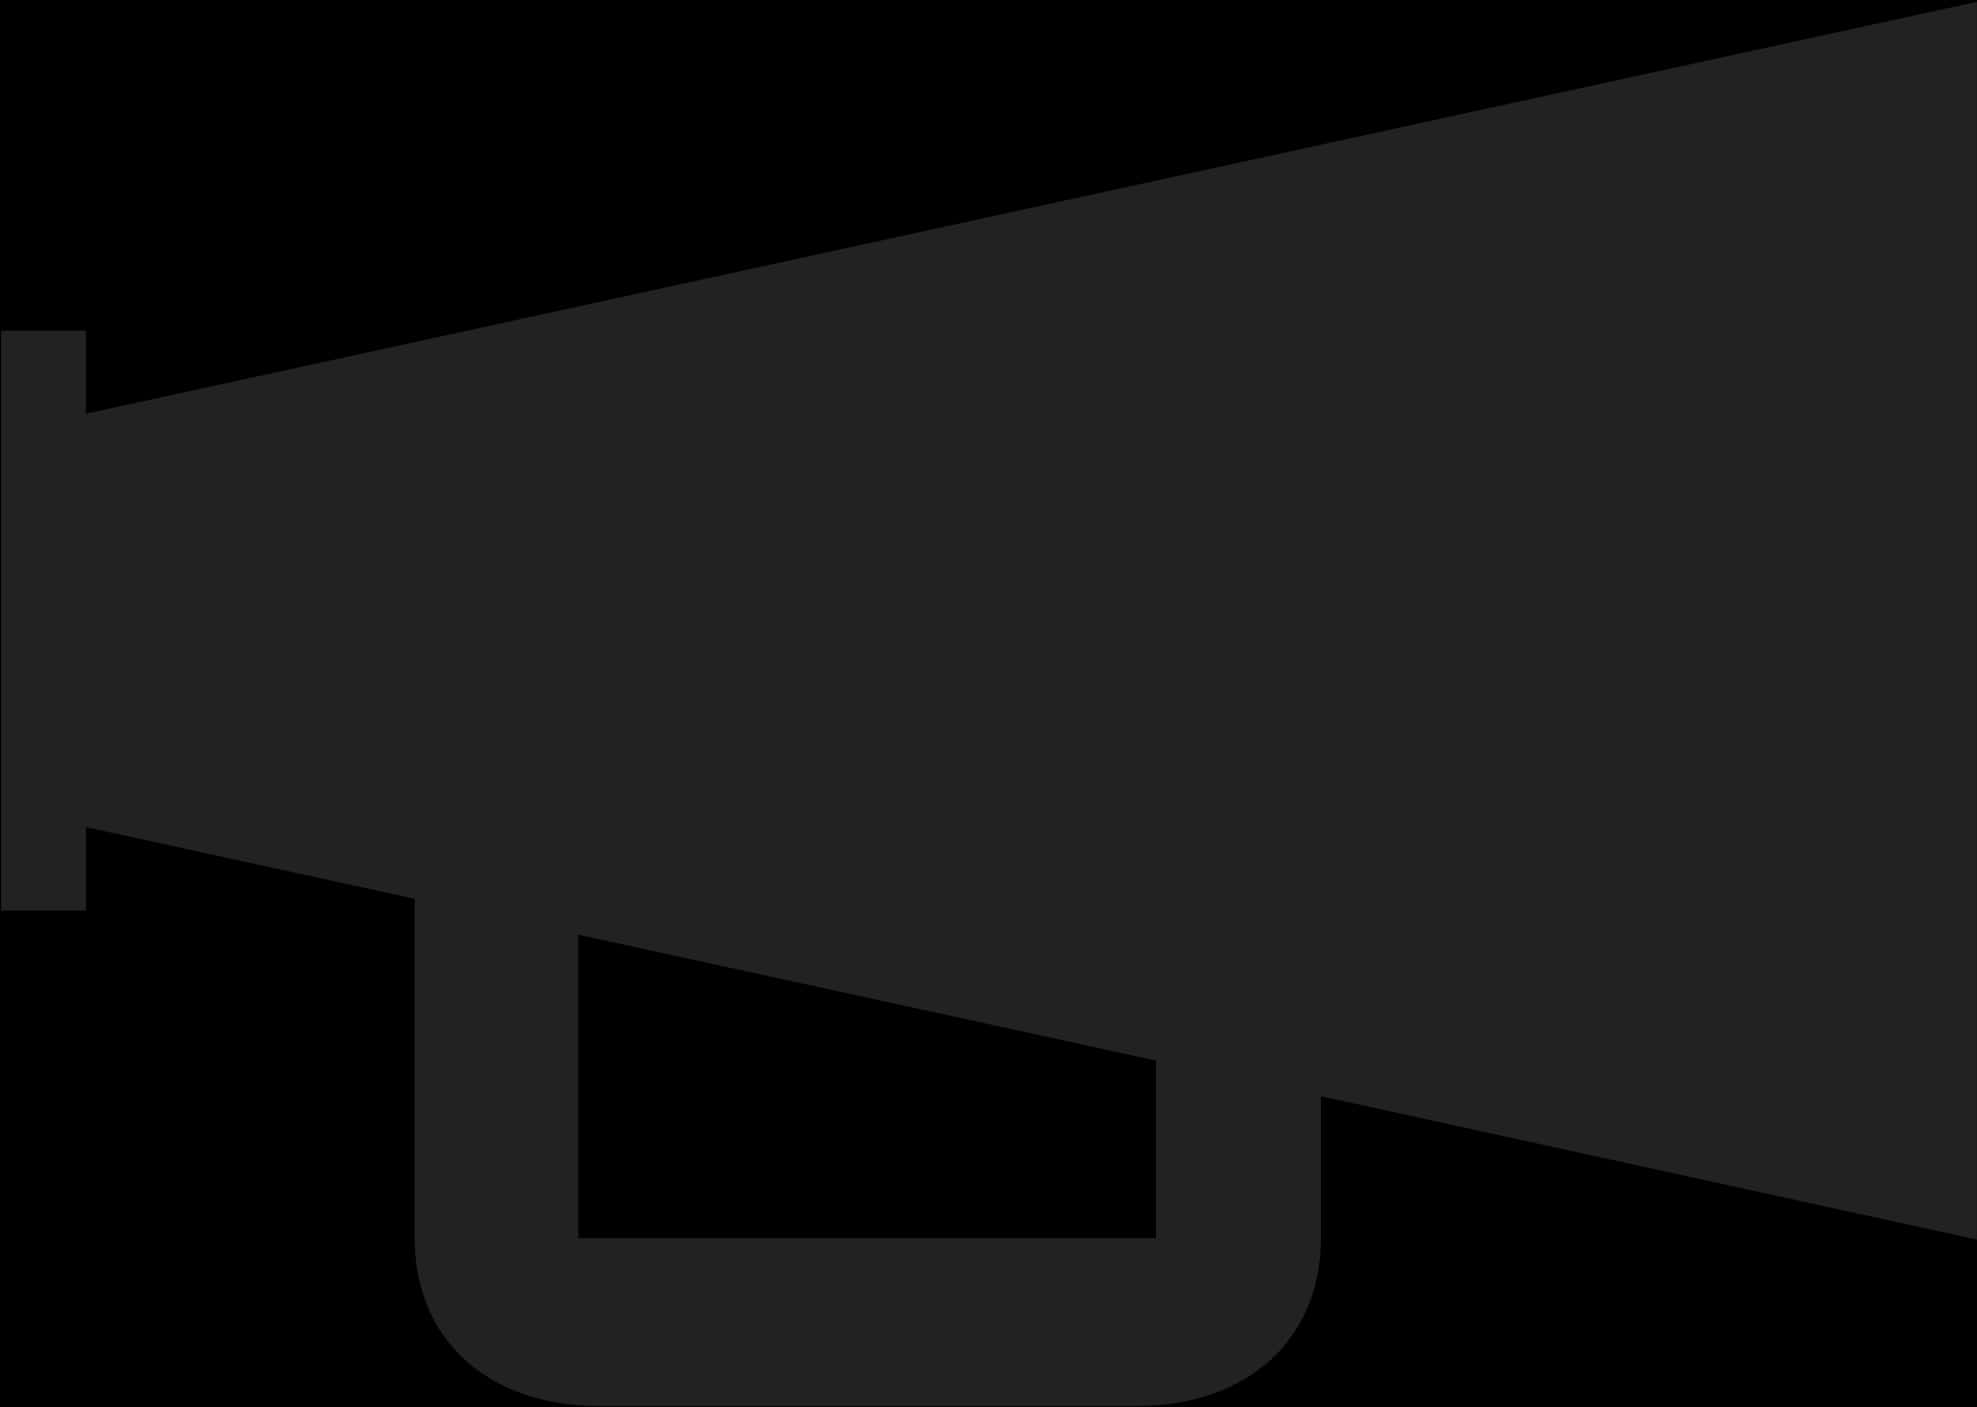 A Black Megaphone On A Black Background